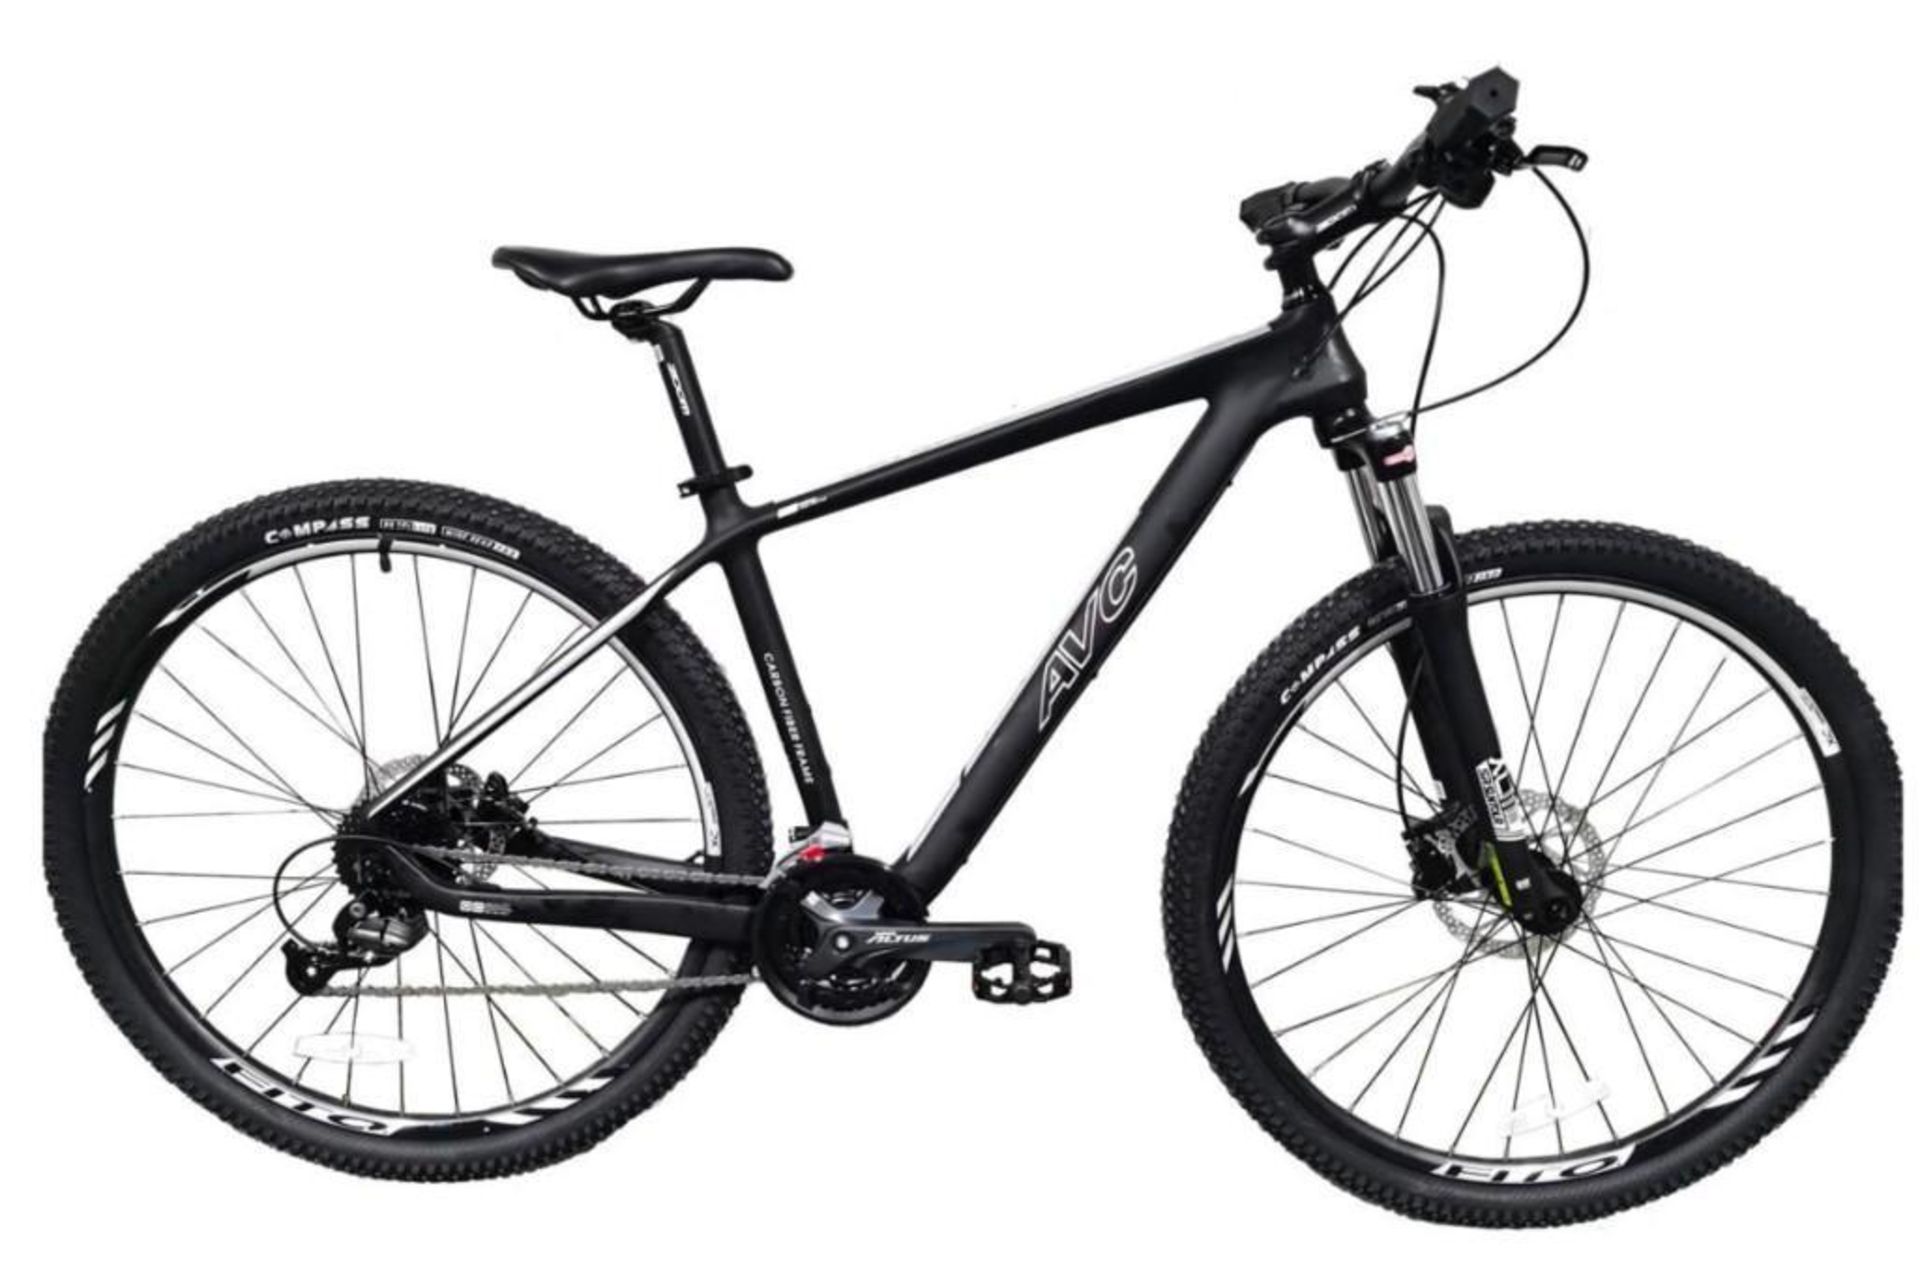 "AVC 29" carbon fiber mountain bike"